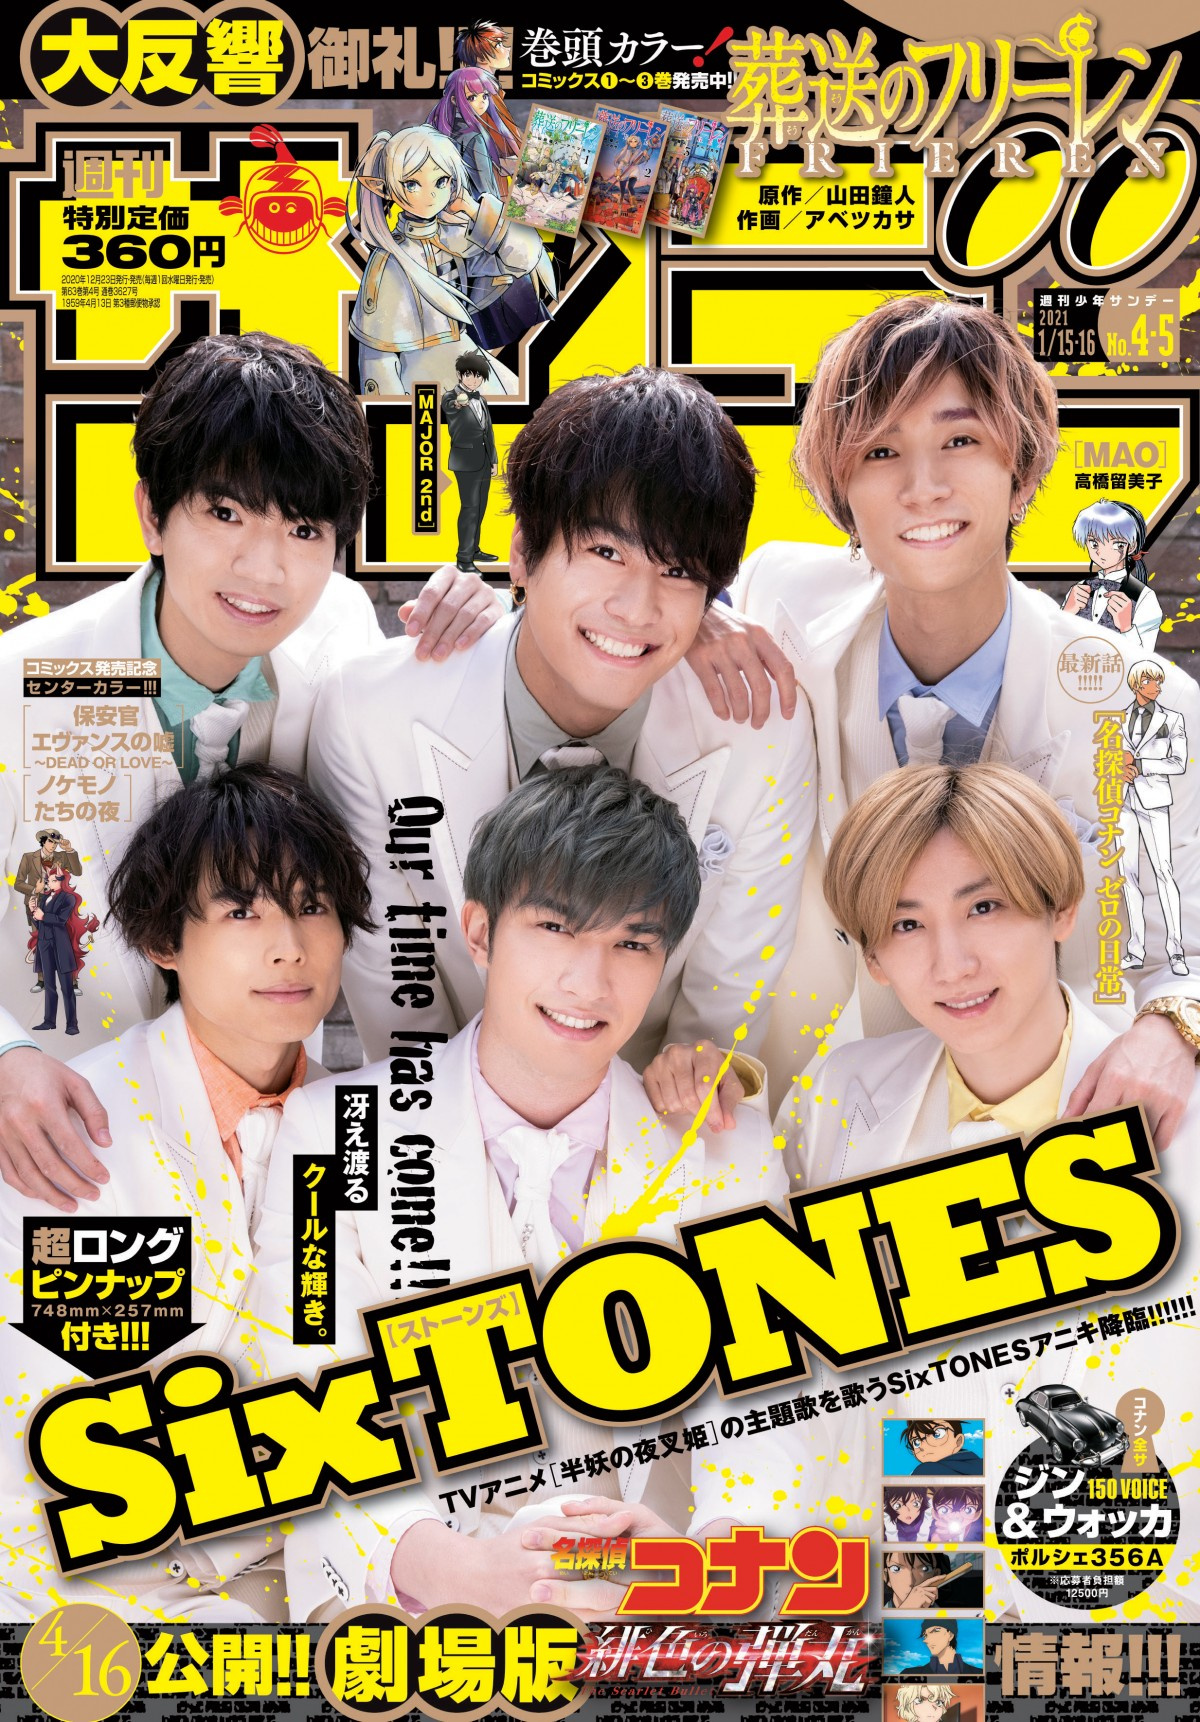 Sixtones 白スーツ姿で 週刊少年サンデー 表紙 巻頭グラビア降臨 Oricon News